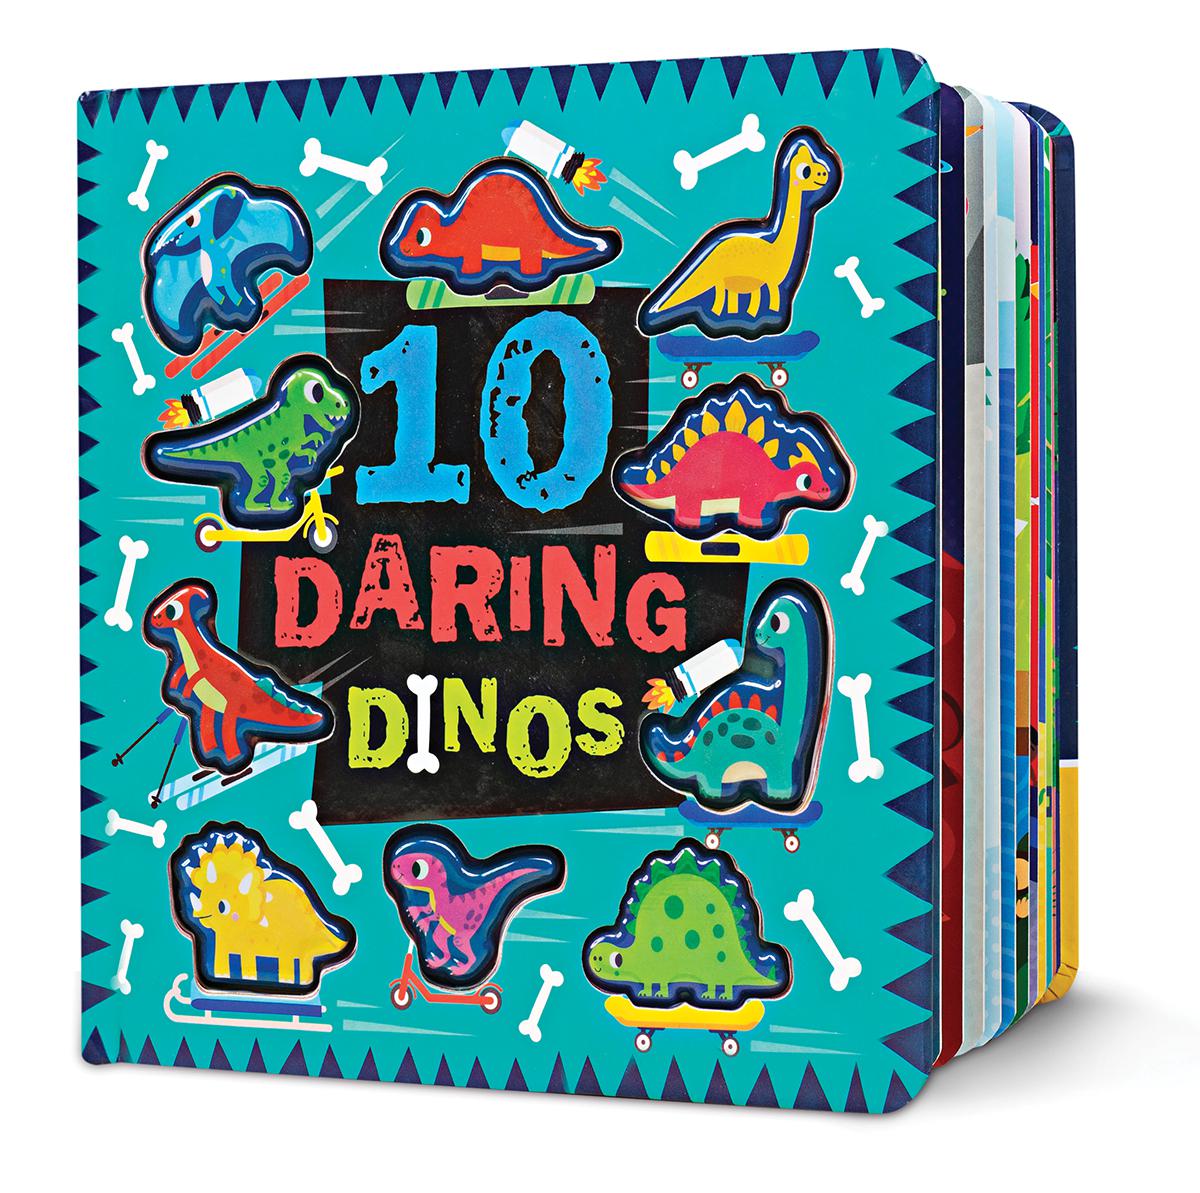  10 Daring Dinos 